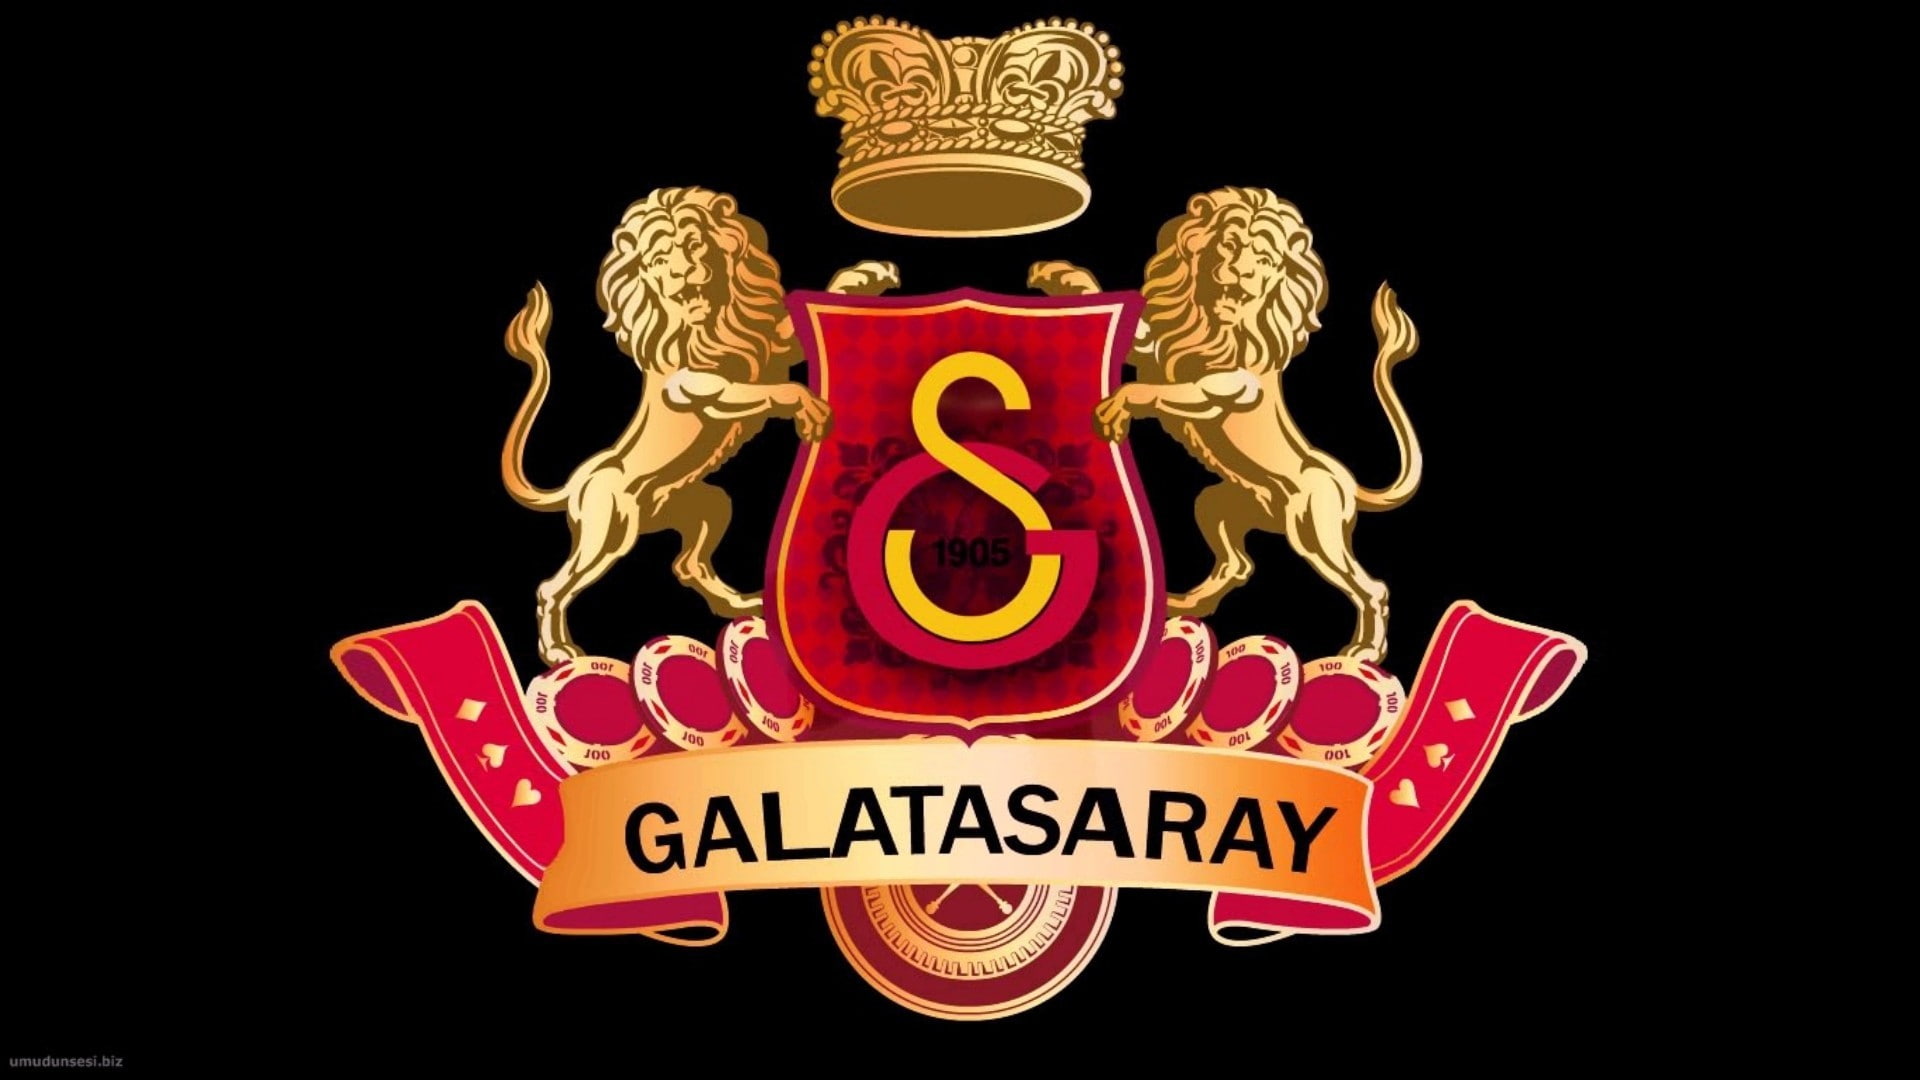 galatasaray sk, text, black background, celebration, communication